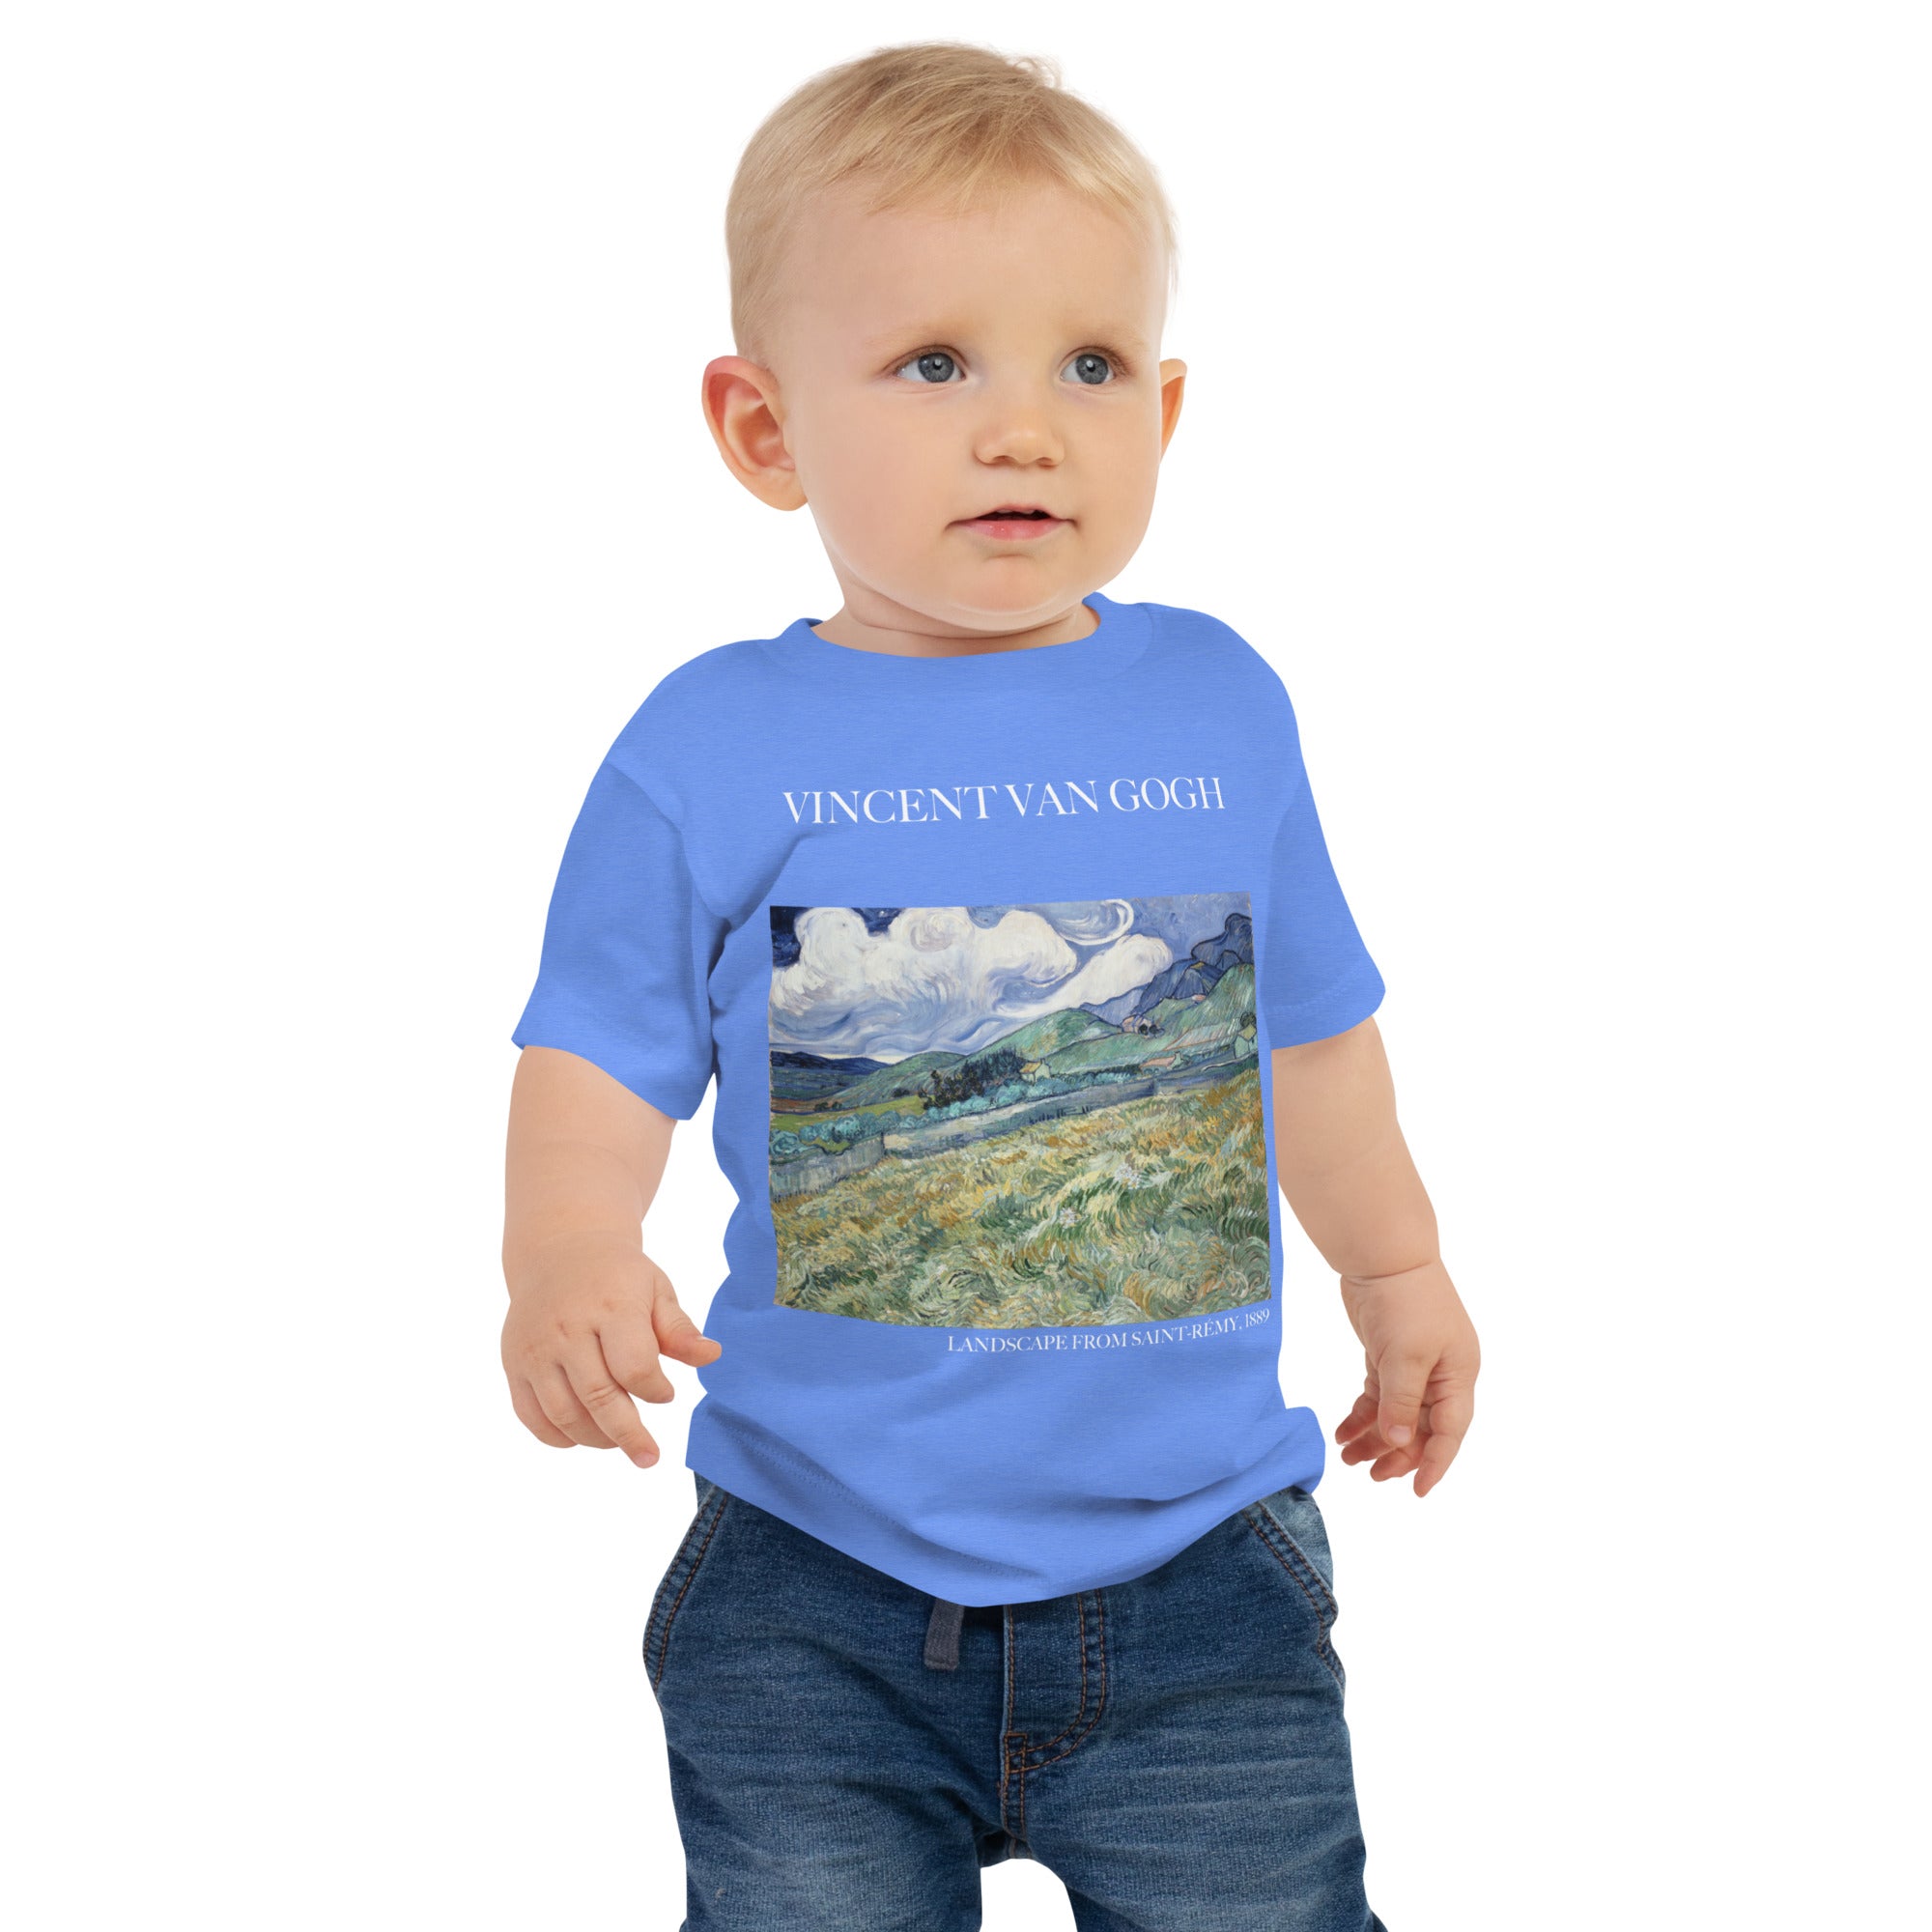 Vincent van Gogh „Landschaft von Saint-Rémy“, berühmtes Gemälde, Baby-T-Shirt, Premium-Kunst-T-Shirt für Babys